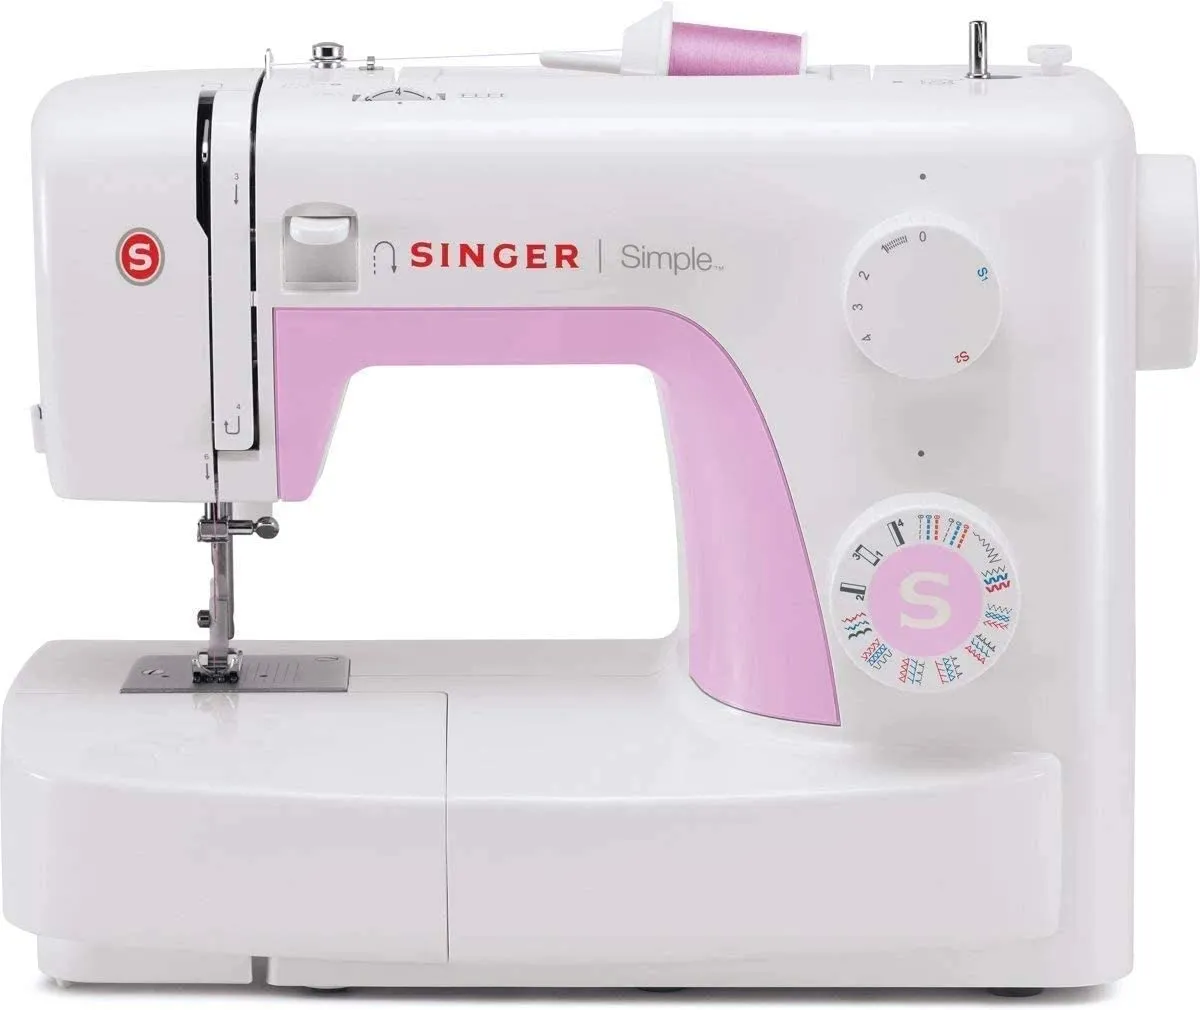 Singer Simple Sewing machine